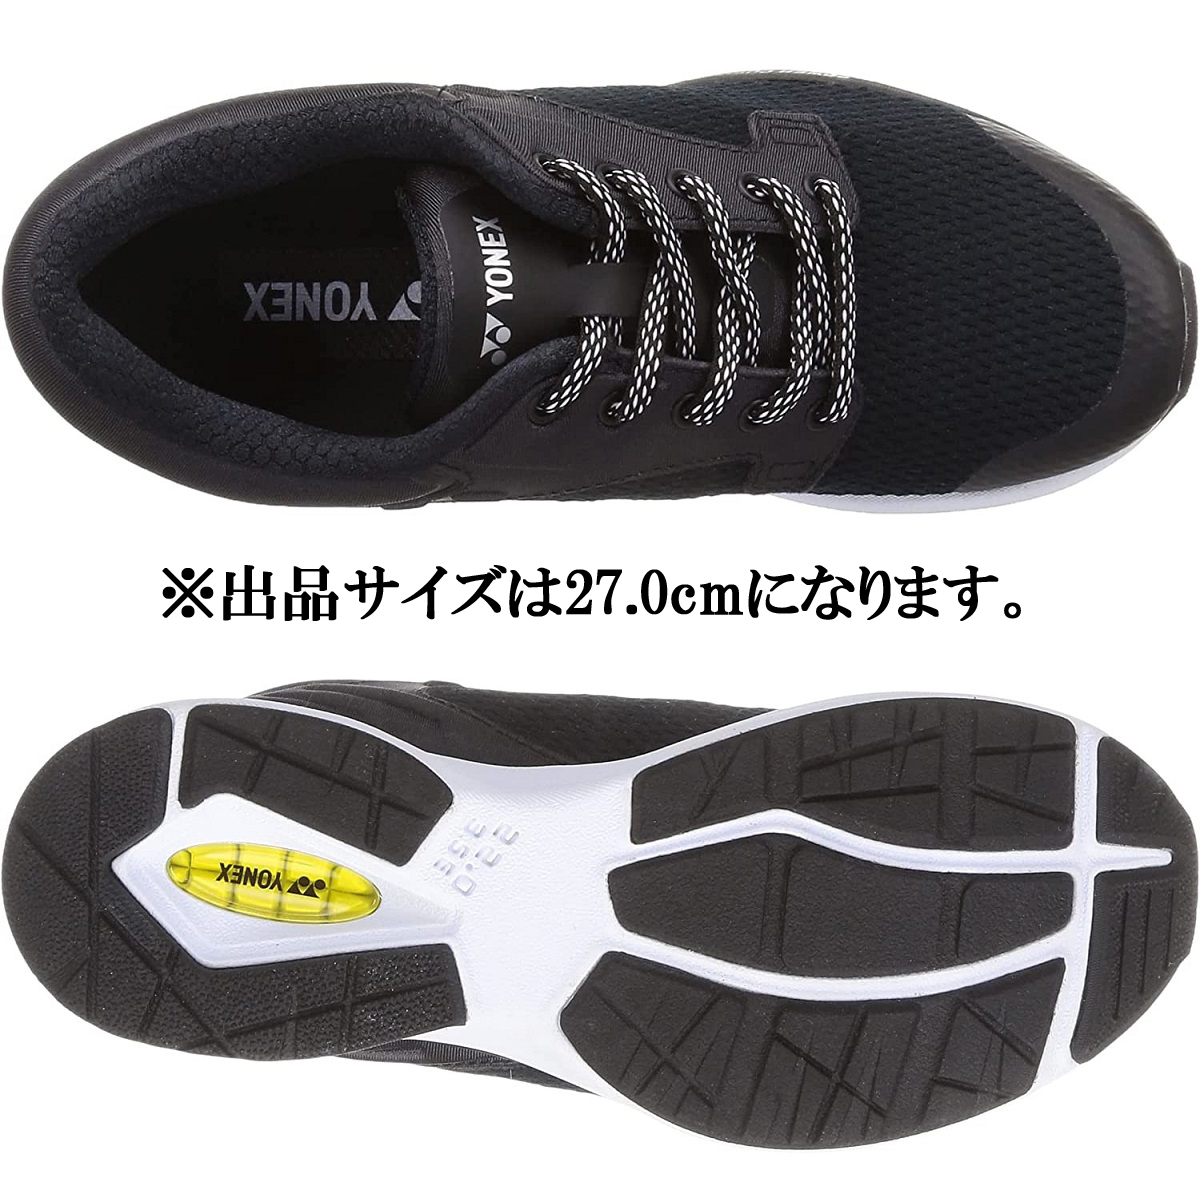 SHW116 BK 27.0cm ヨネックス ウォーキング ジョギング ランニング パワークッション シューズ 靴 3.5E YONEX メッシュ 軽量_画像3